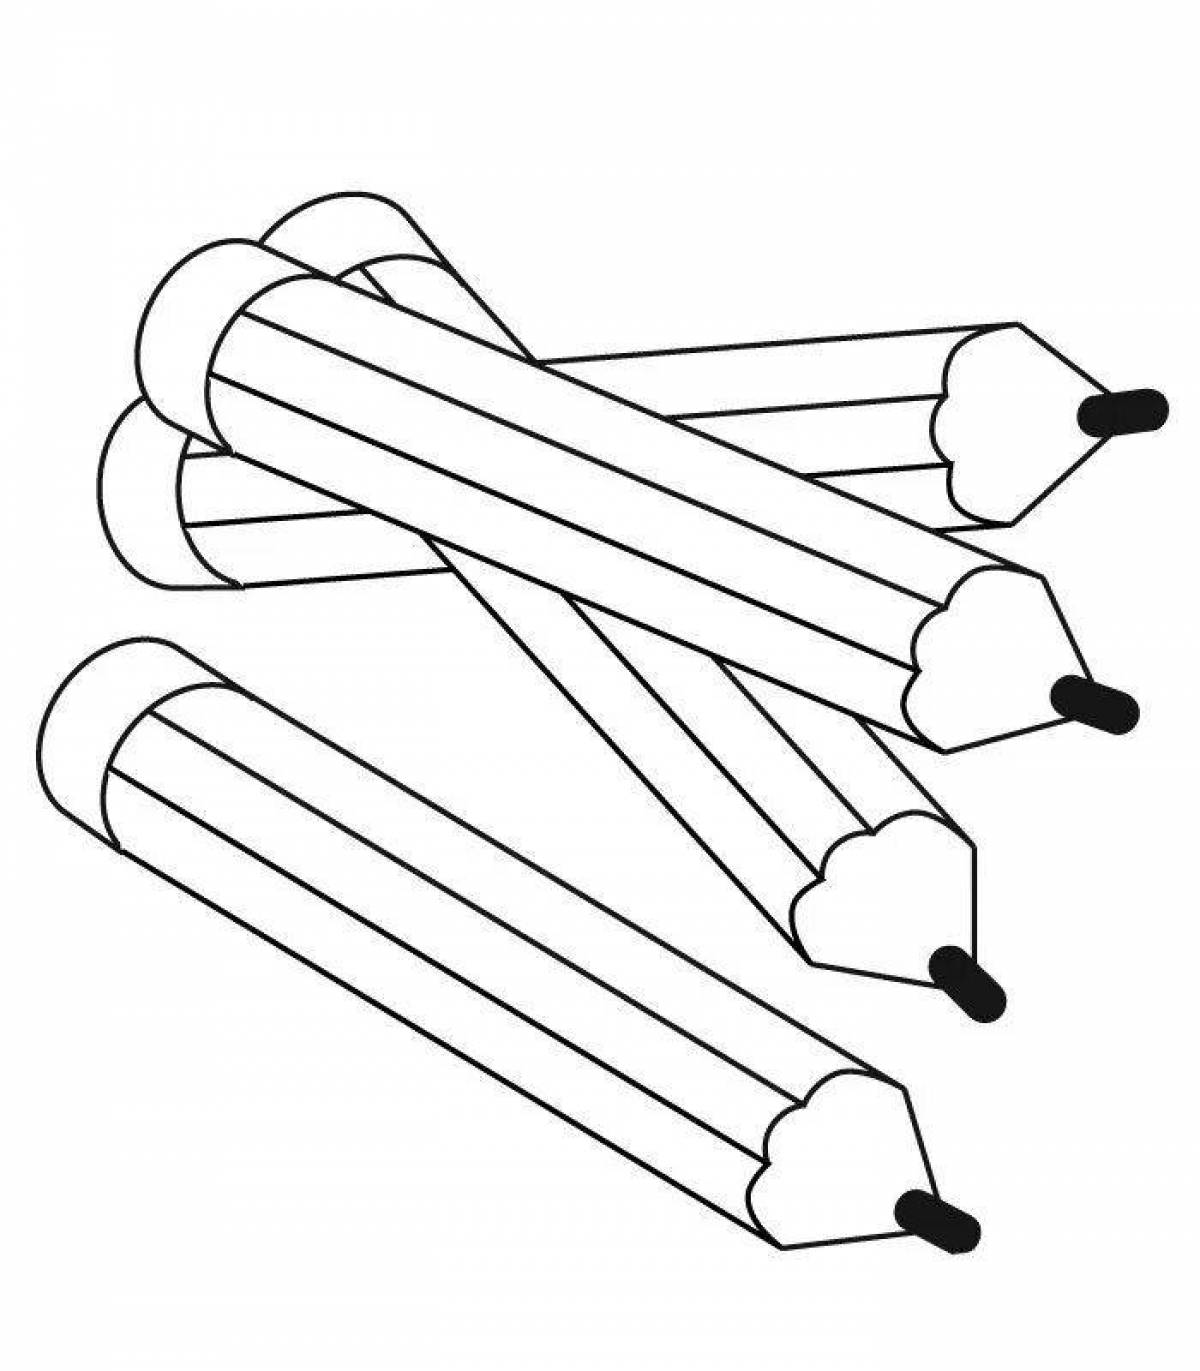 Pencils for children #1